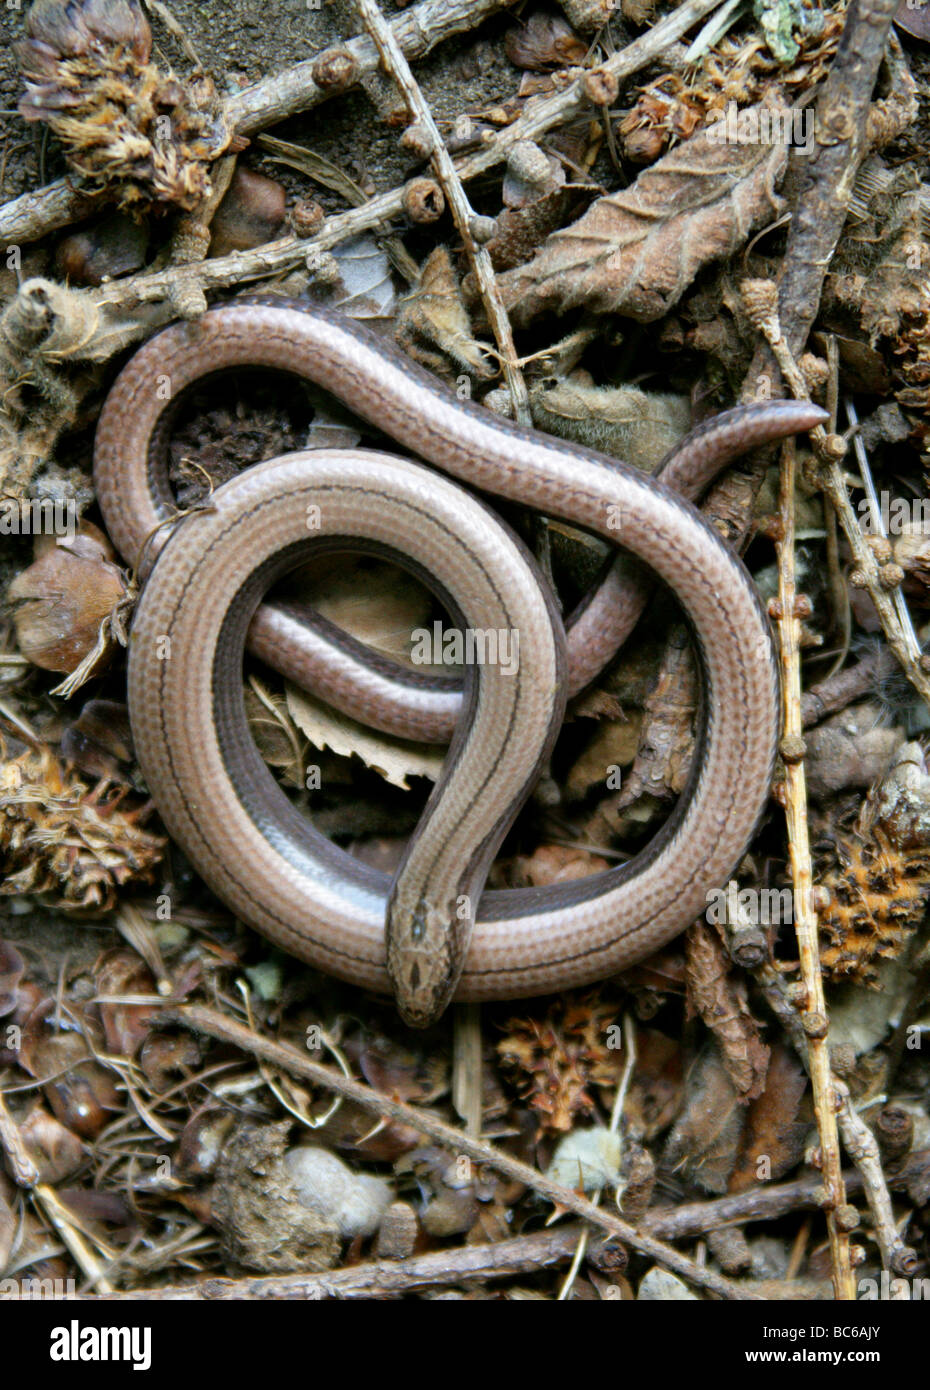 Slow Worm aka Slow-worm, Slowworm, Blindworm or Blind Worm, Anguis fragilis, Anguidae, Lizard, Reptile Stock Photo